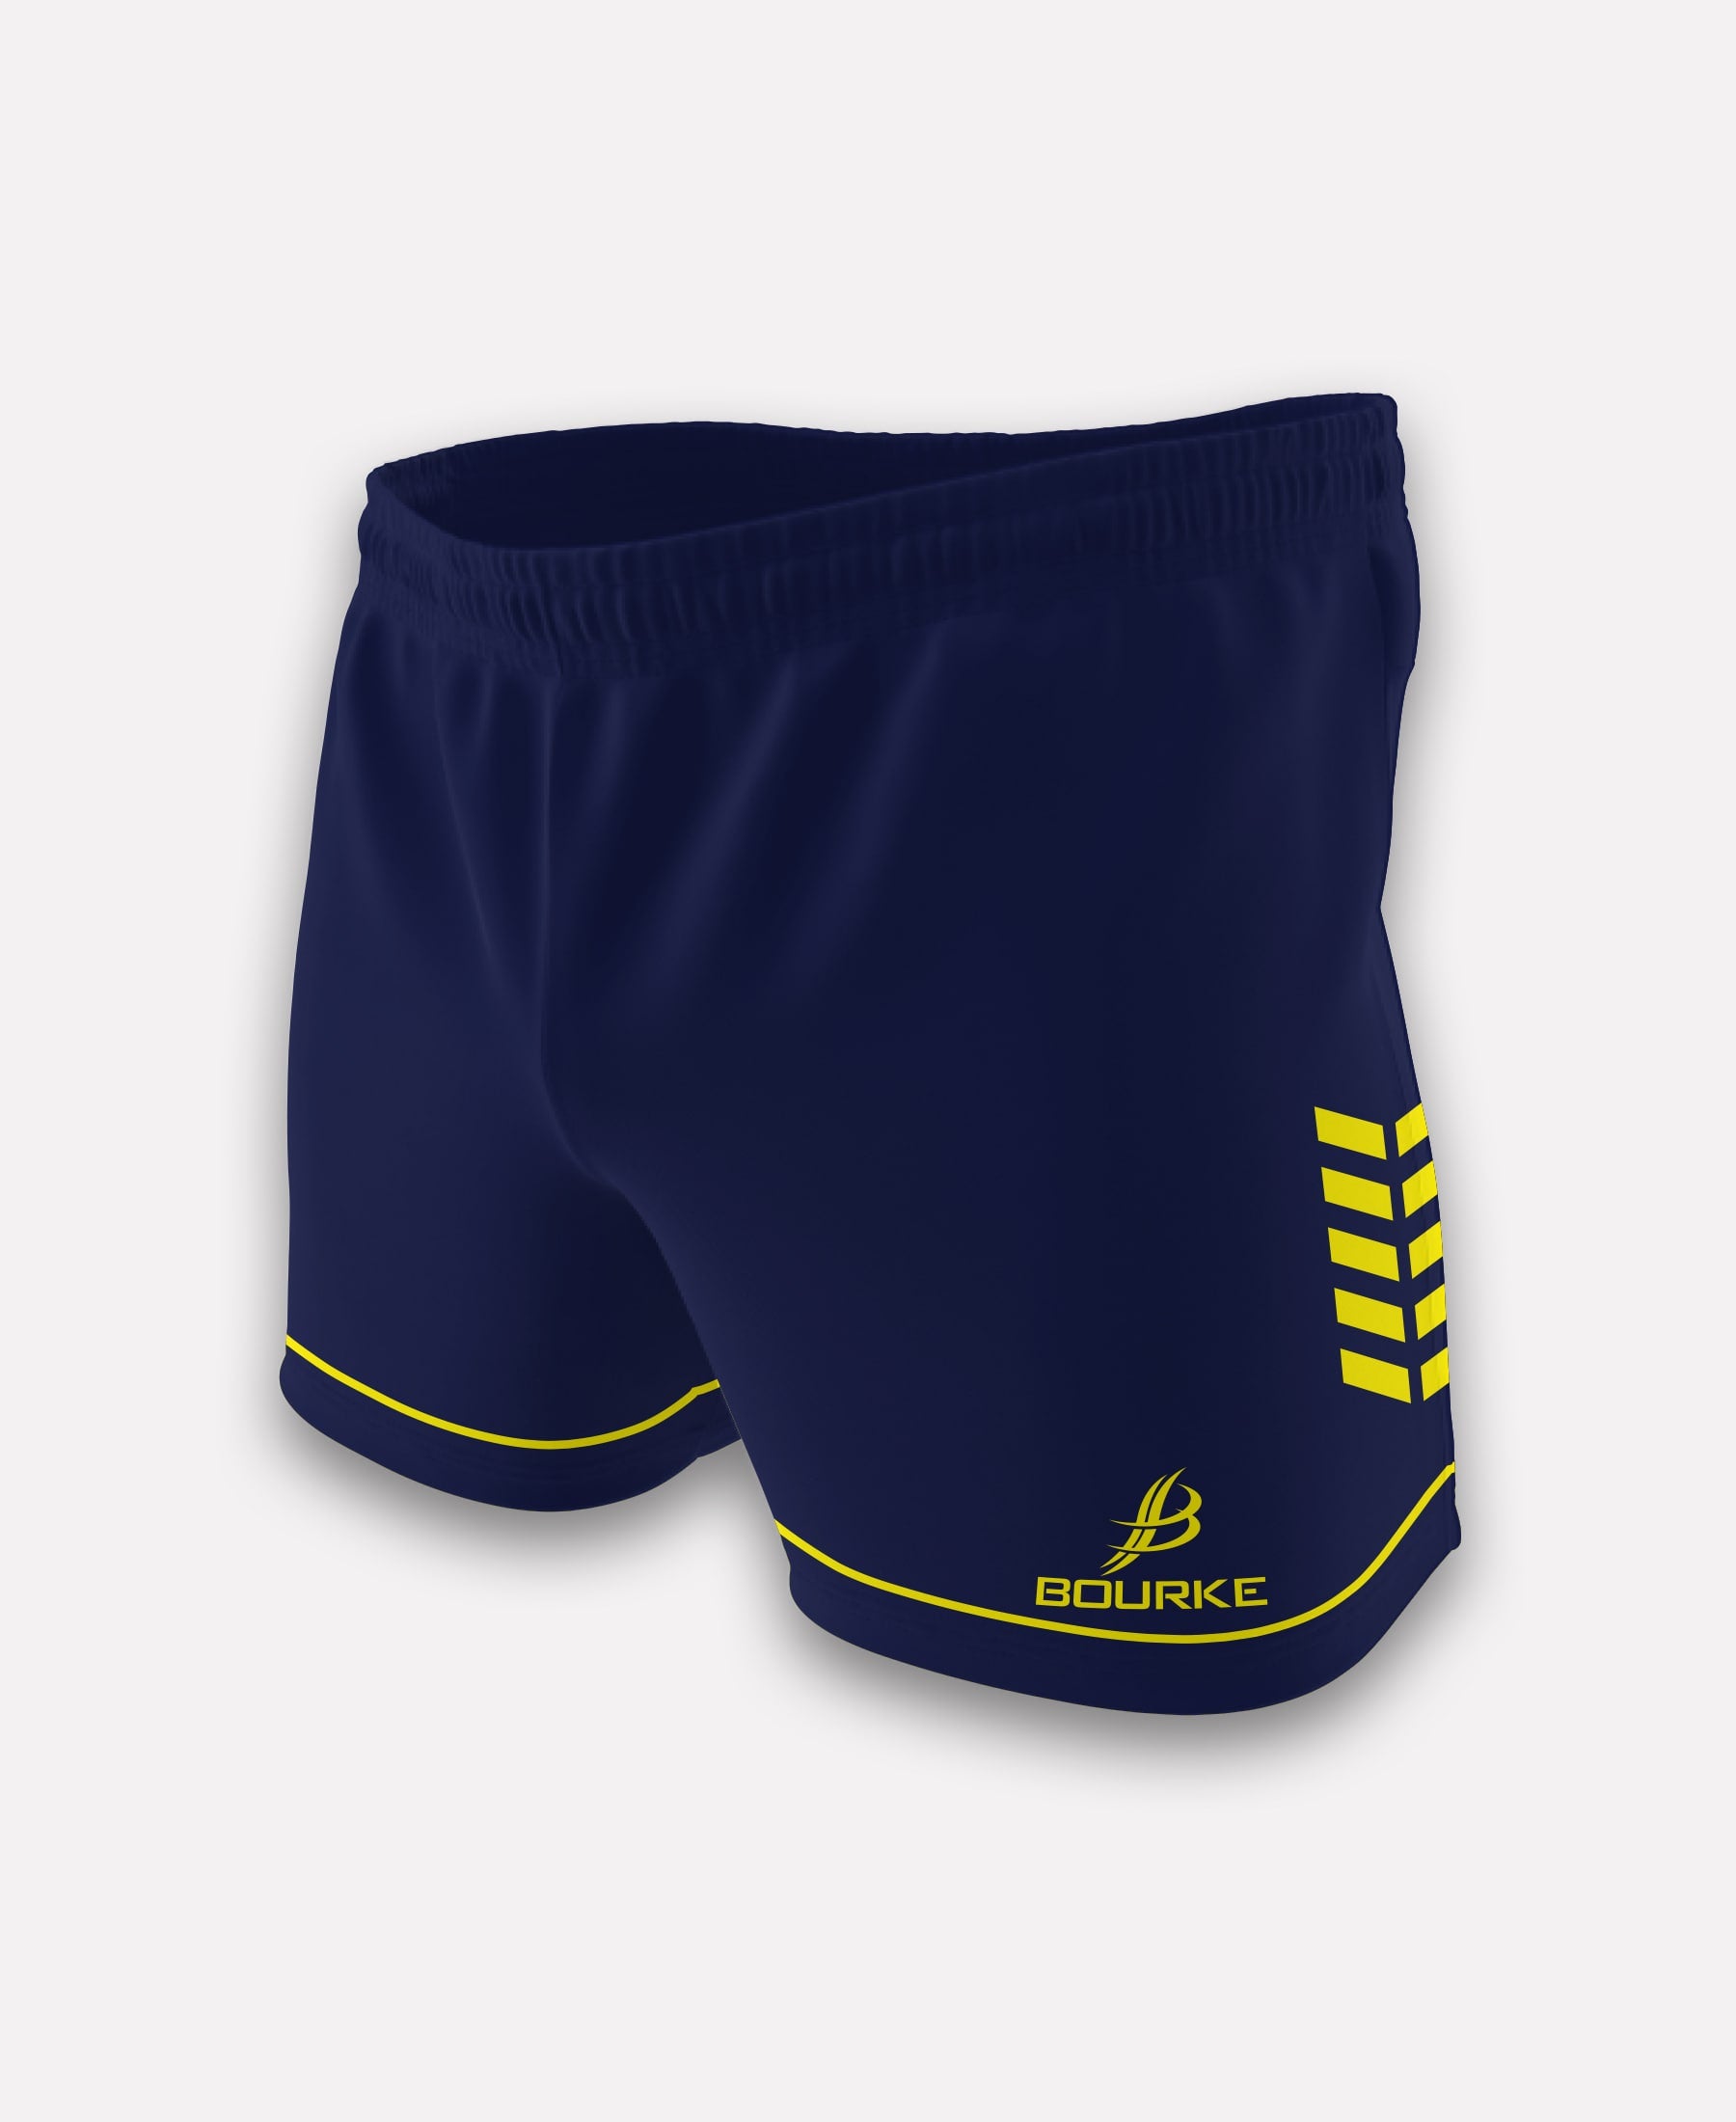 Croga Adult Shorts Navy / Flo yellow